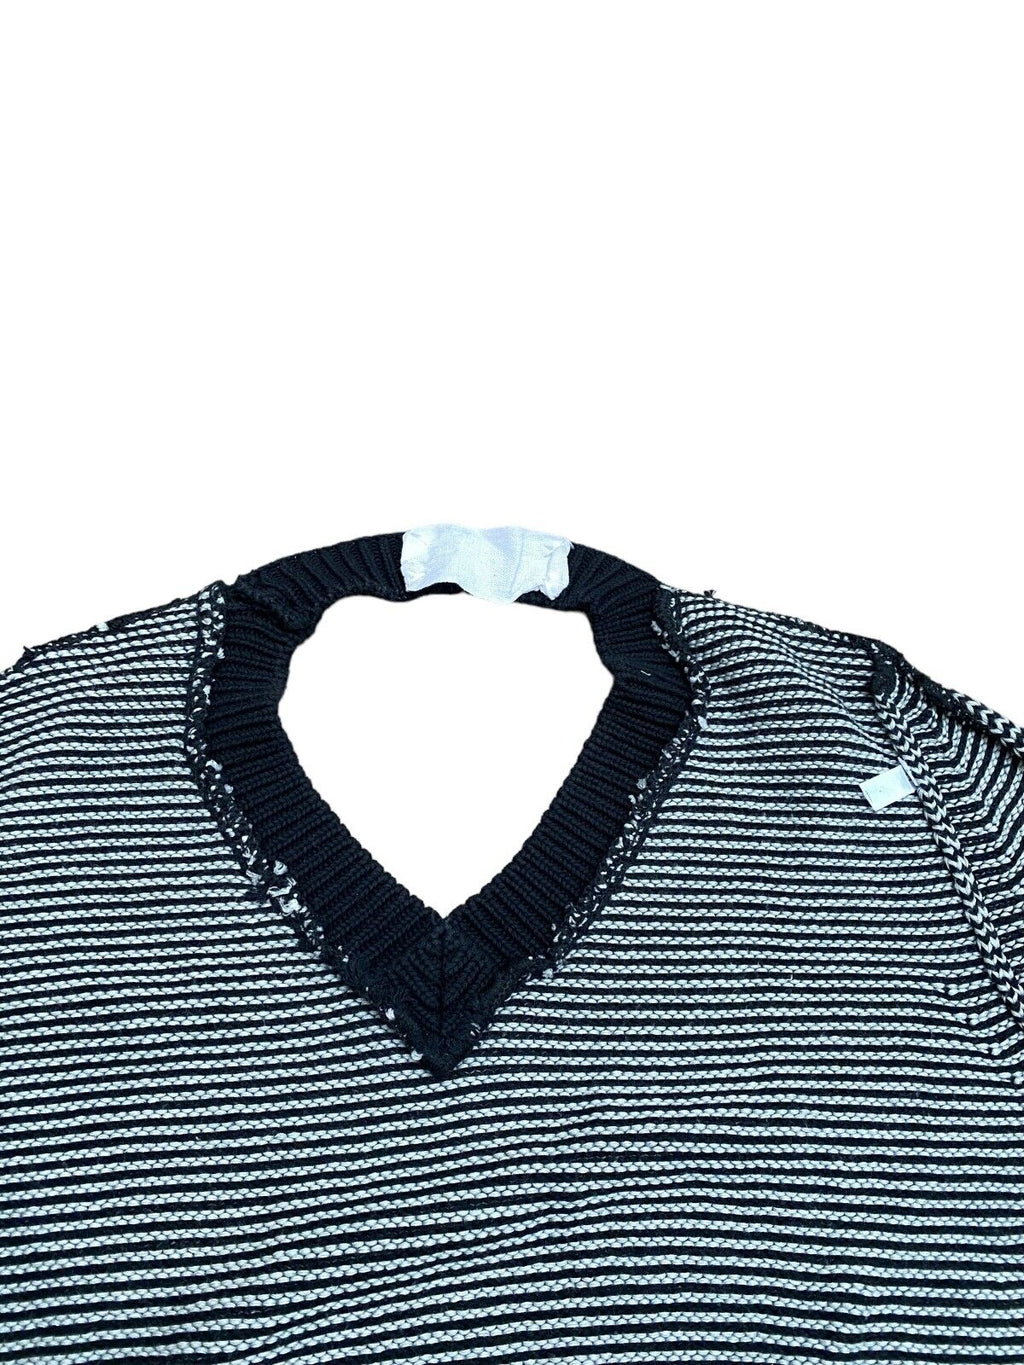 SS 1997 Striped Half Knit Sweater Size M